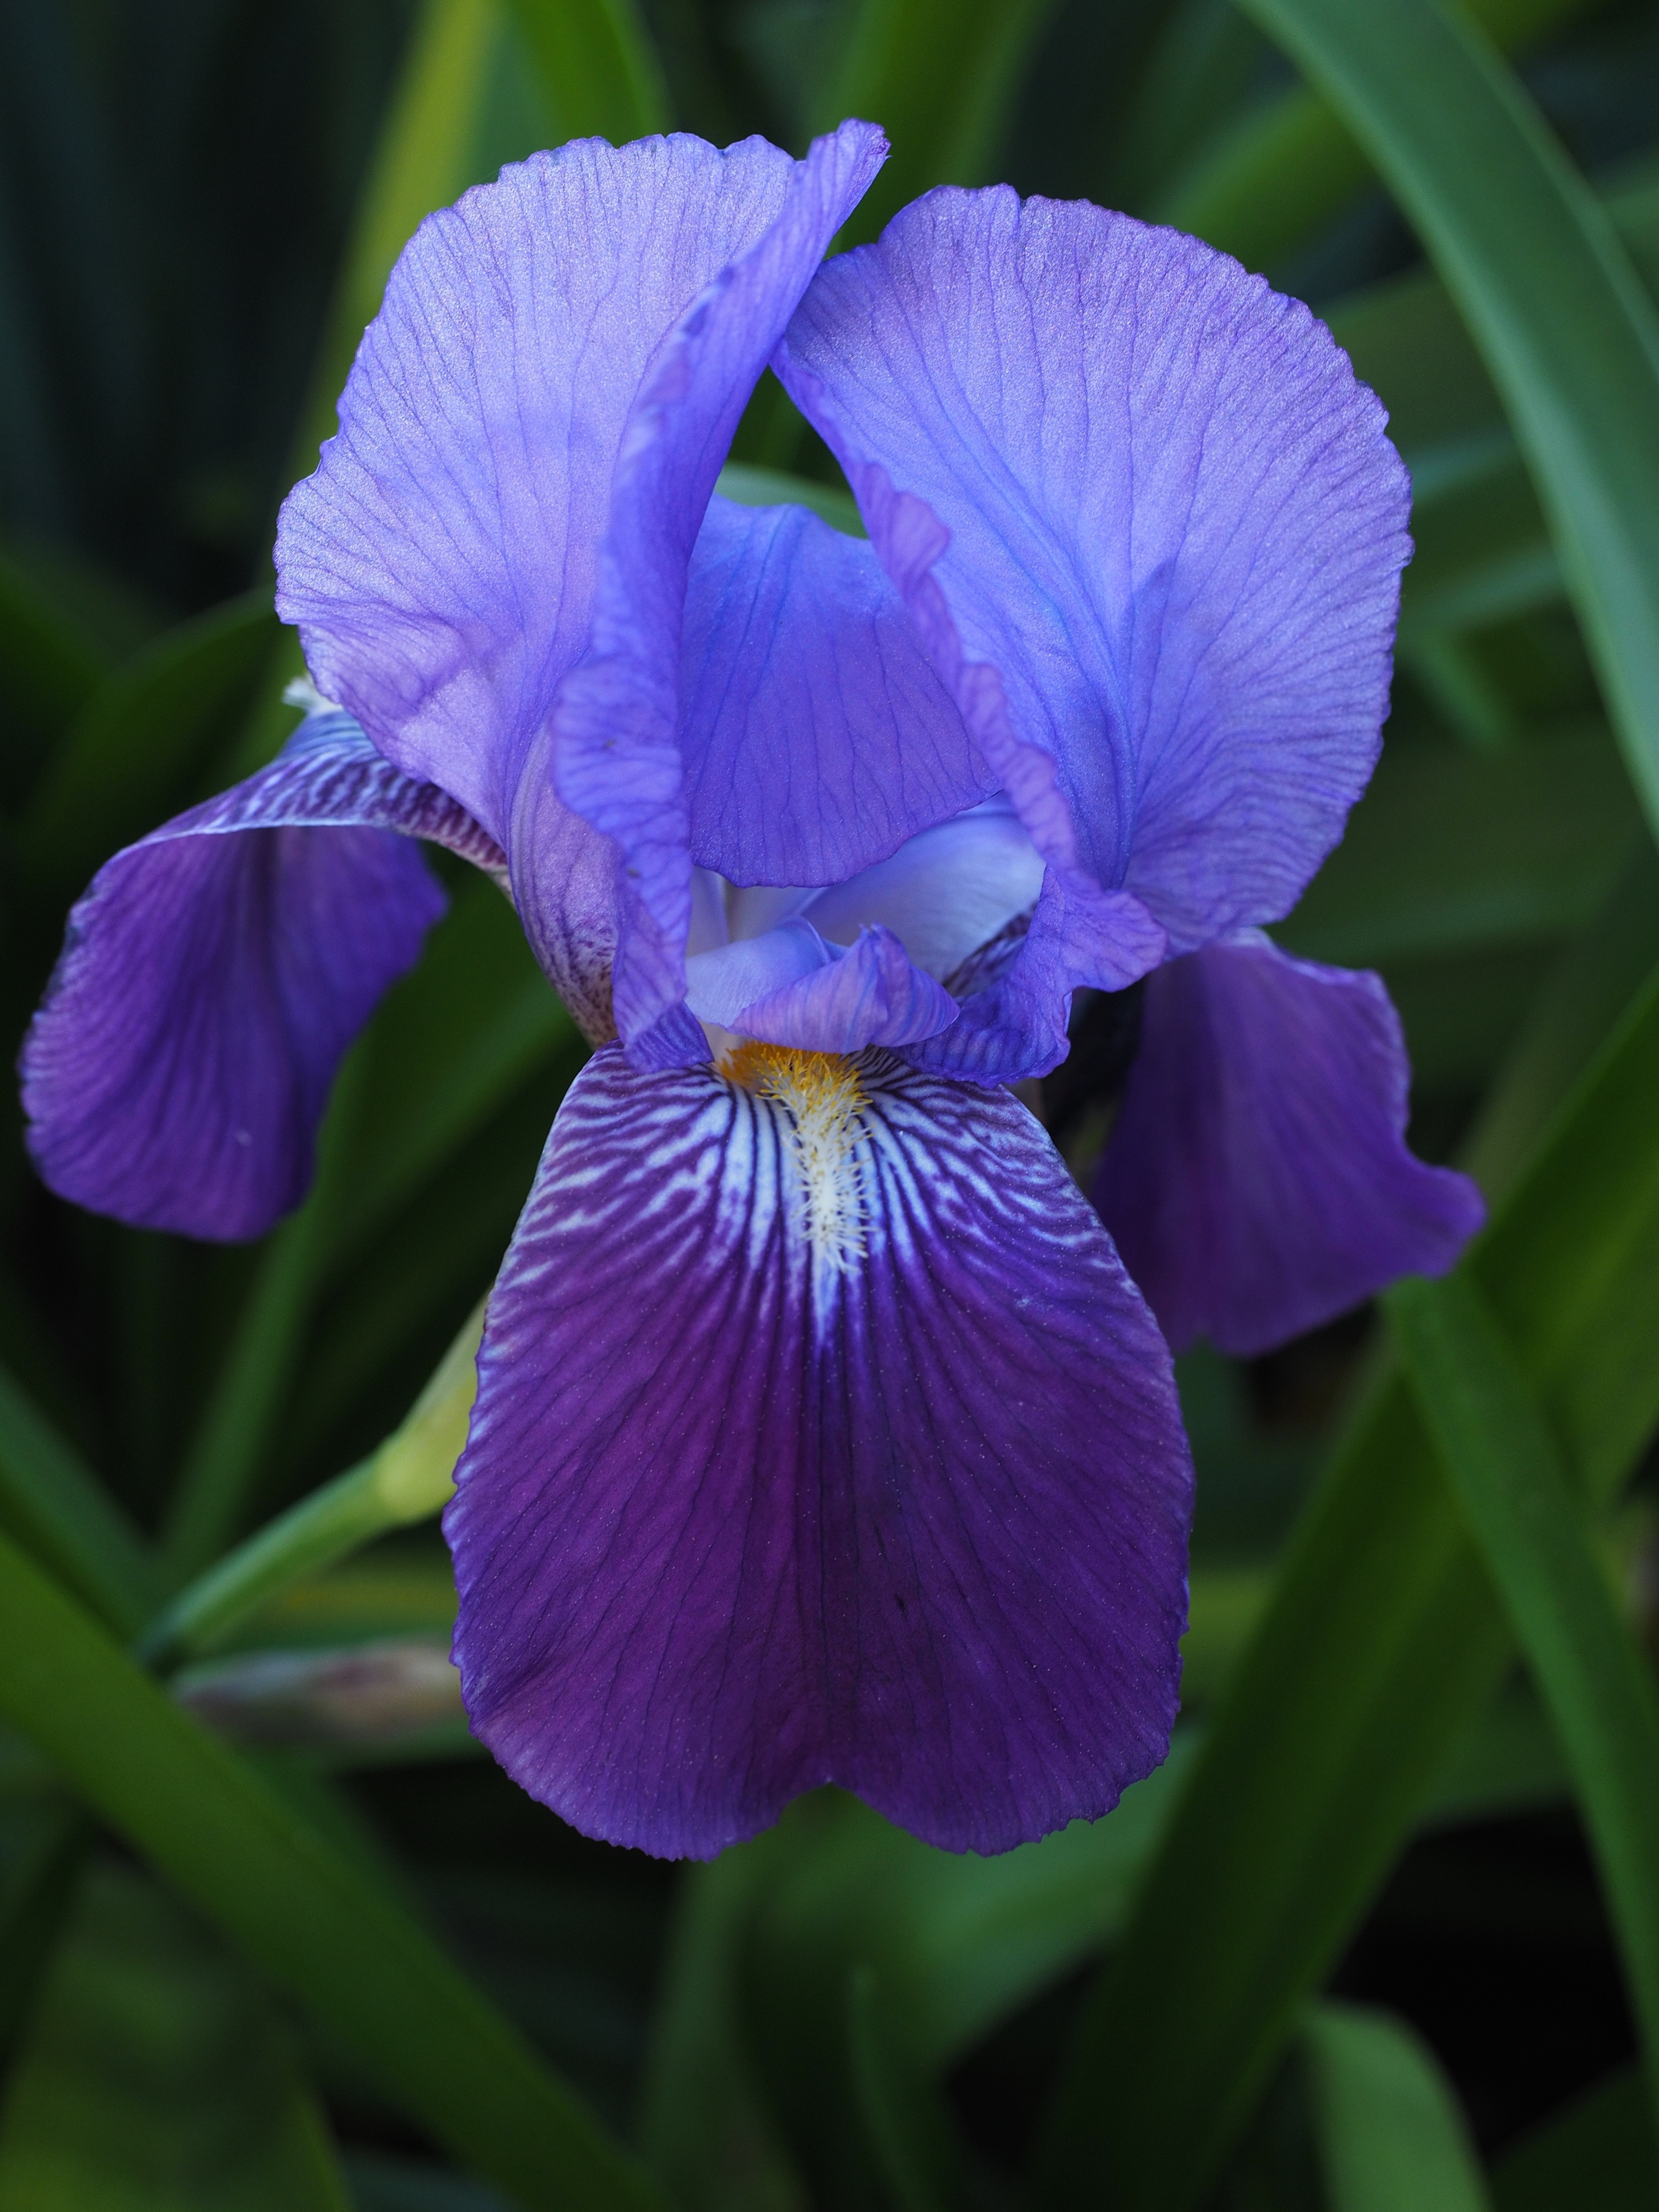 Iris, Lily, Flower, Blossom, Bloom, flower, purple